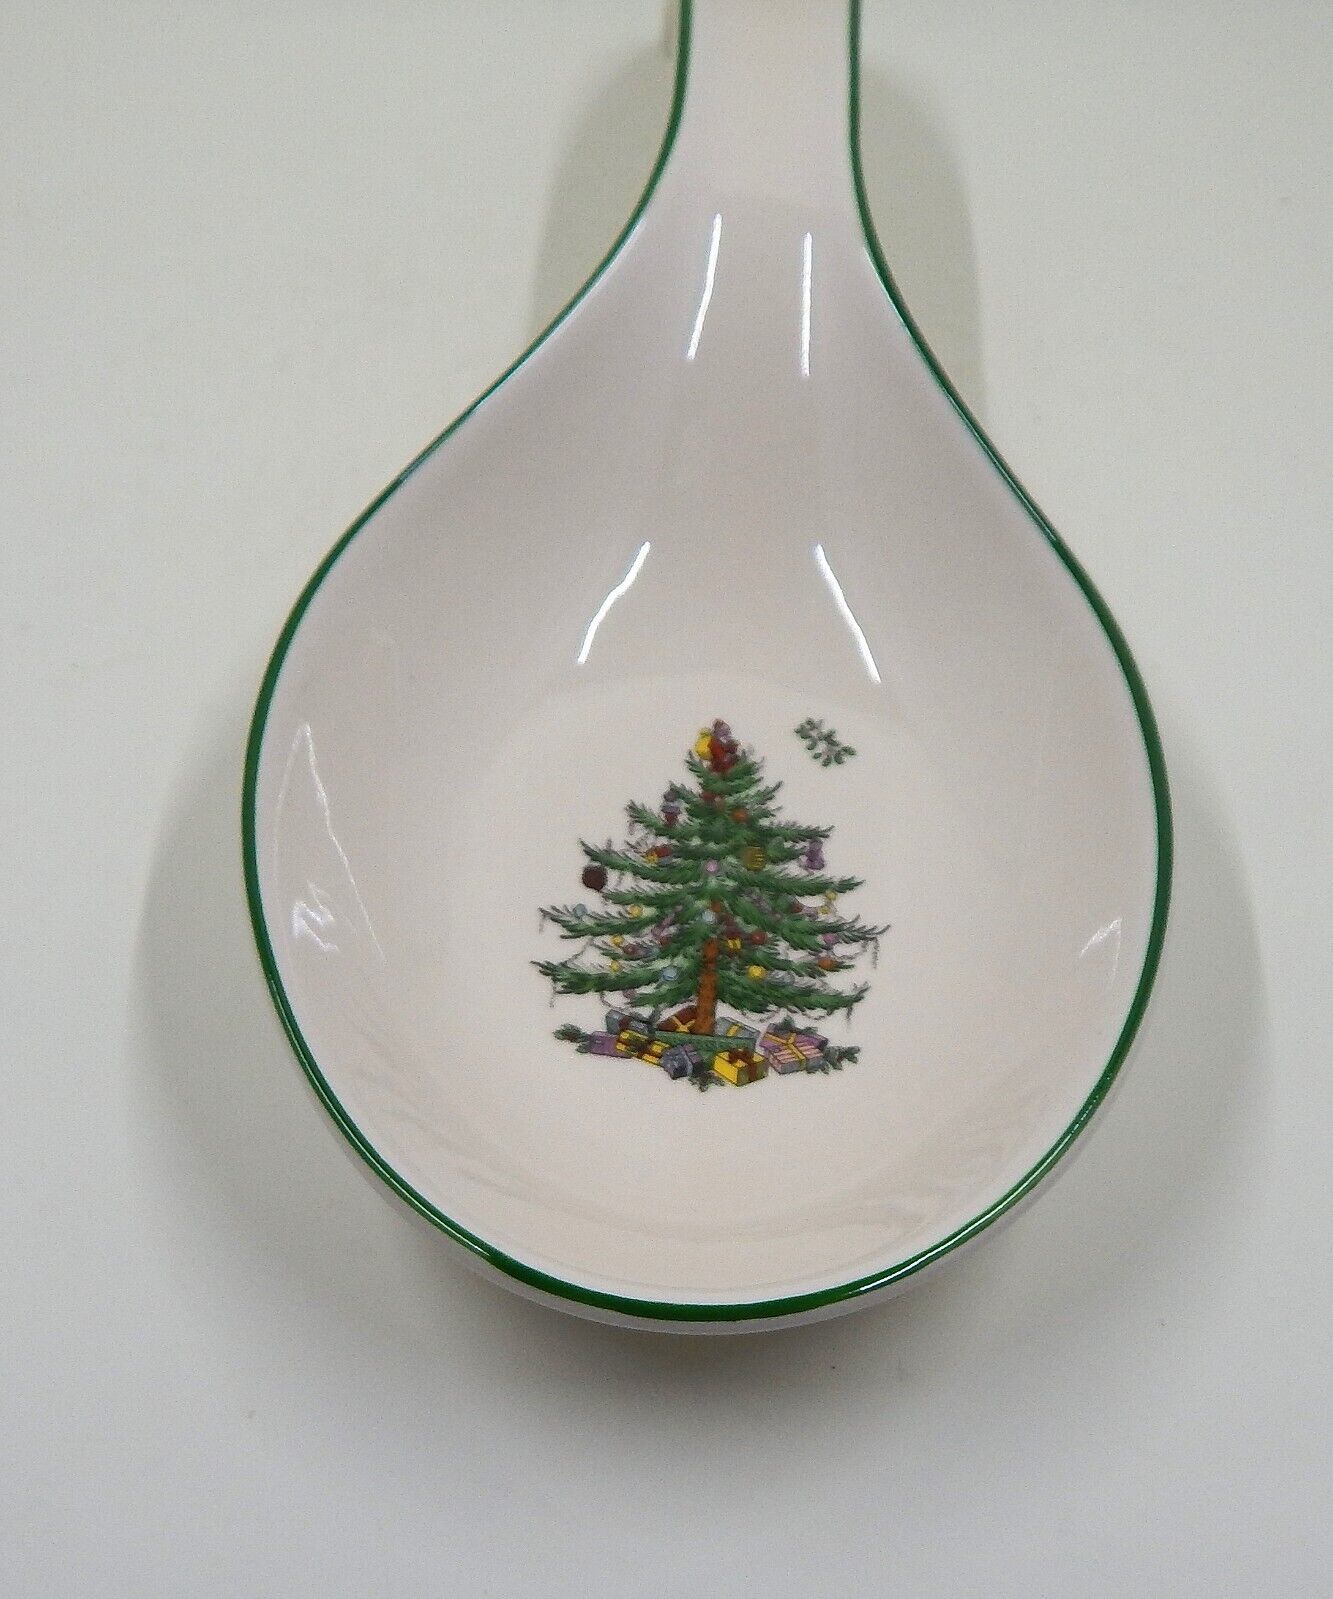 Spode Christmas Tree Porcelain Spoon Rest S3324-A8 - $19.99